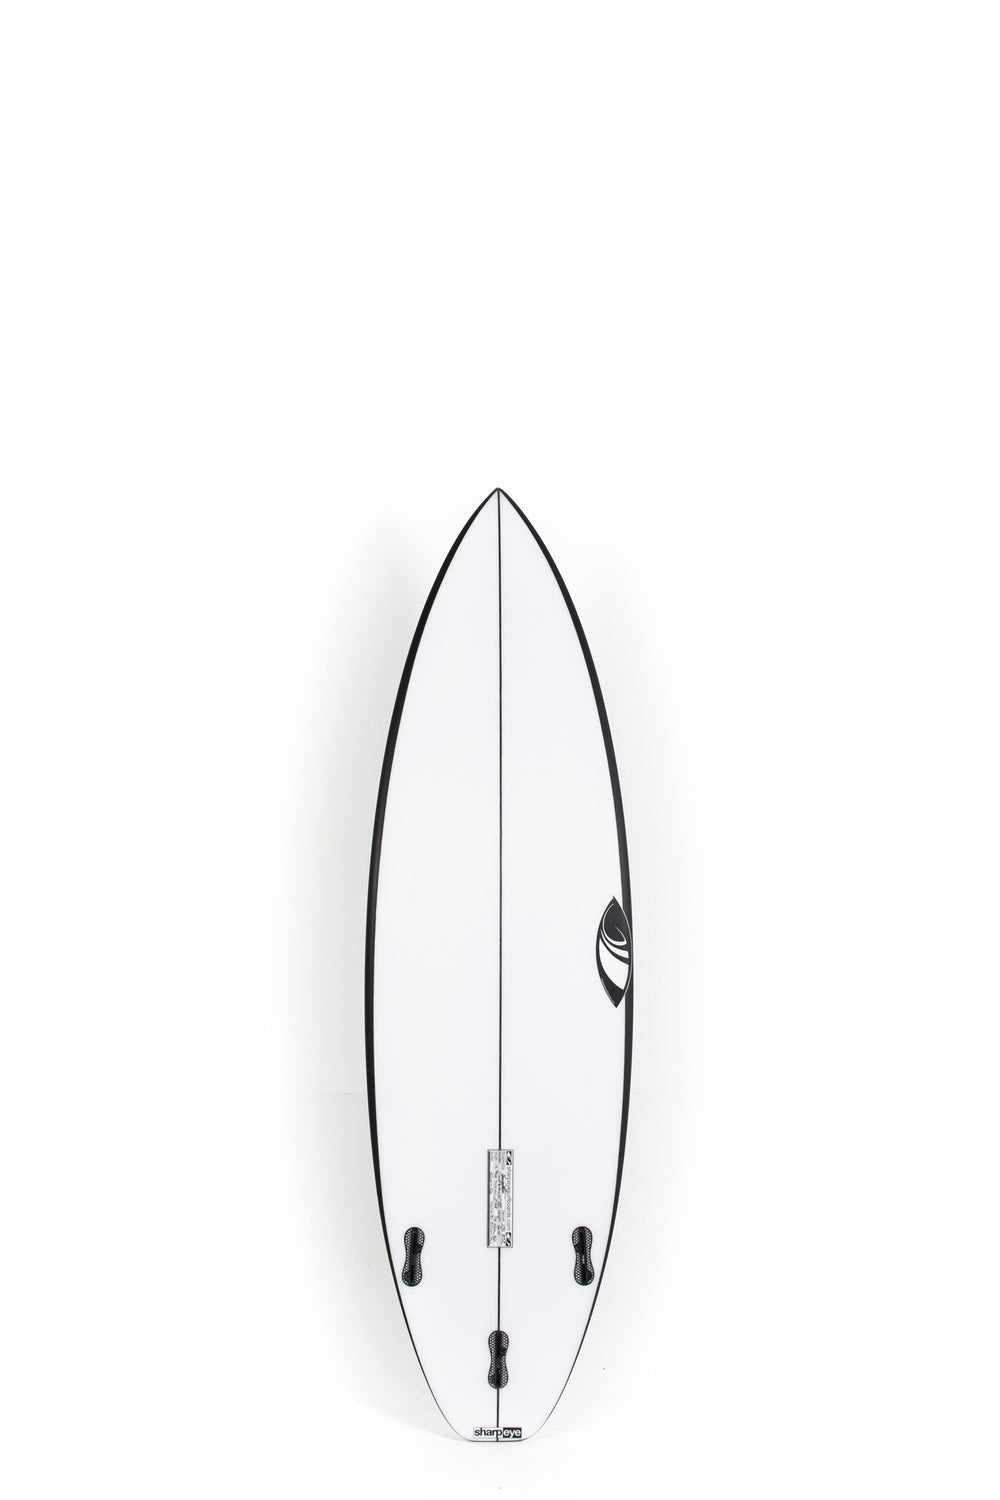 Sharp Eye Surfboards - INFERNO 72 by Marcio Zouvi 6'0